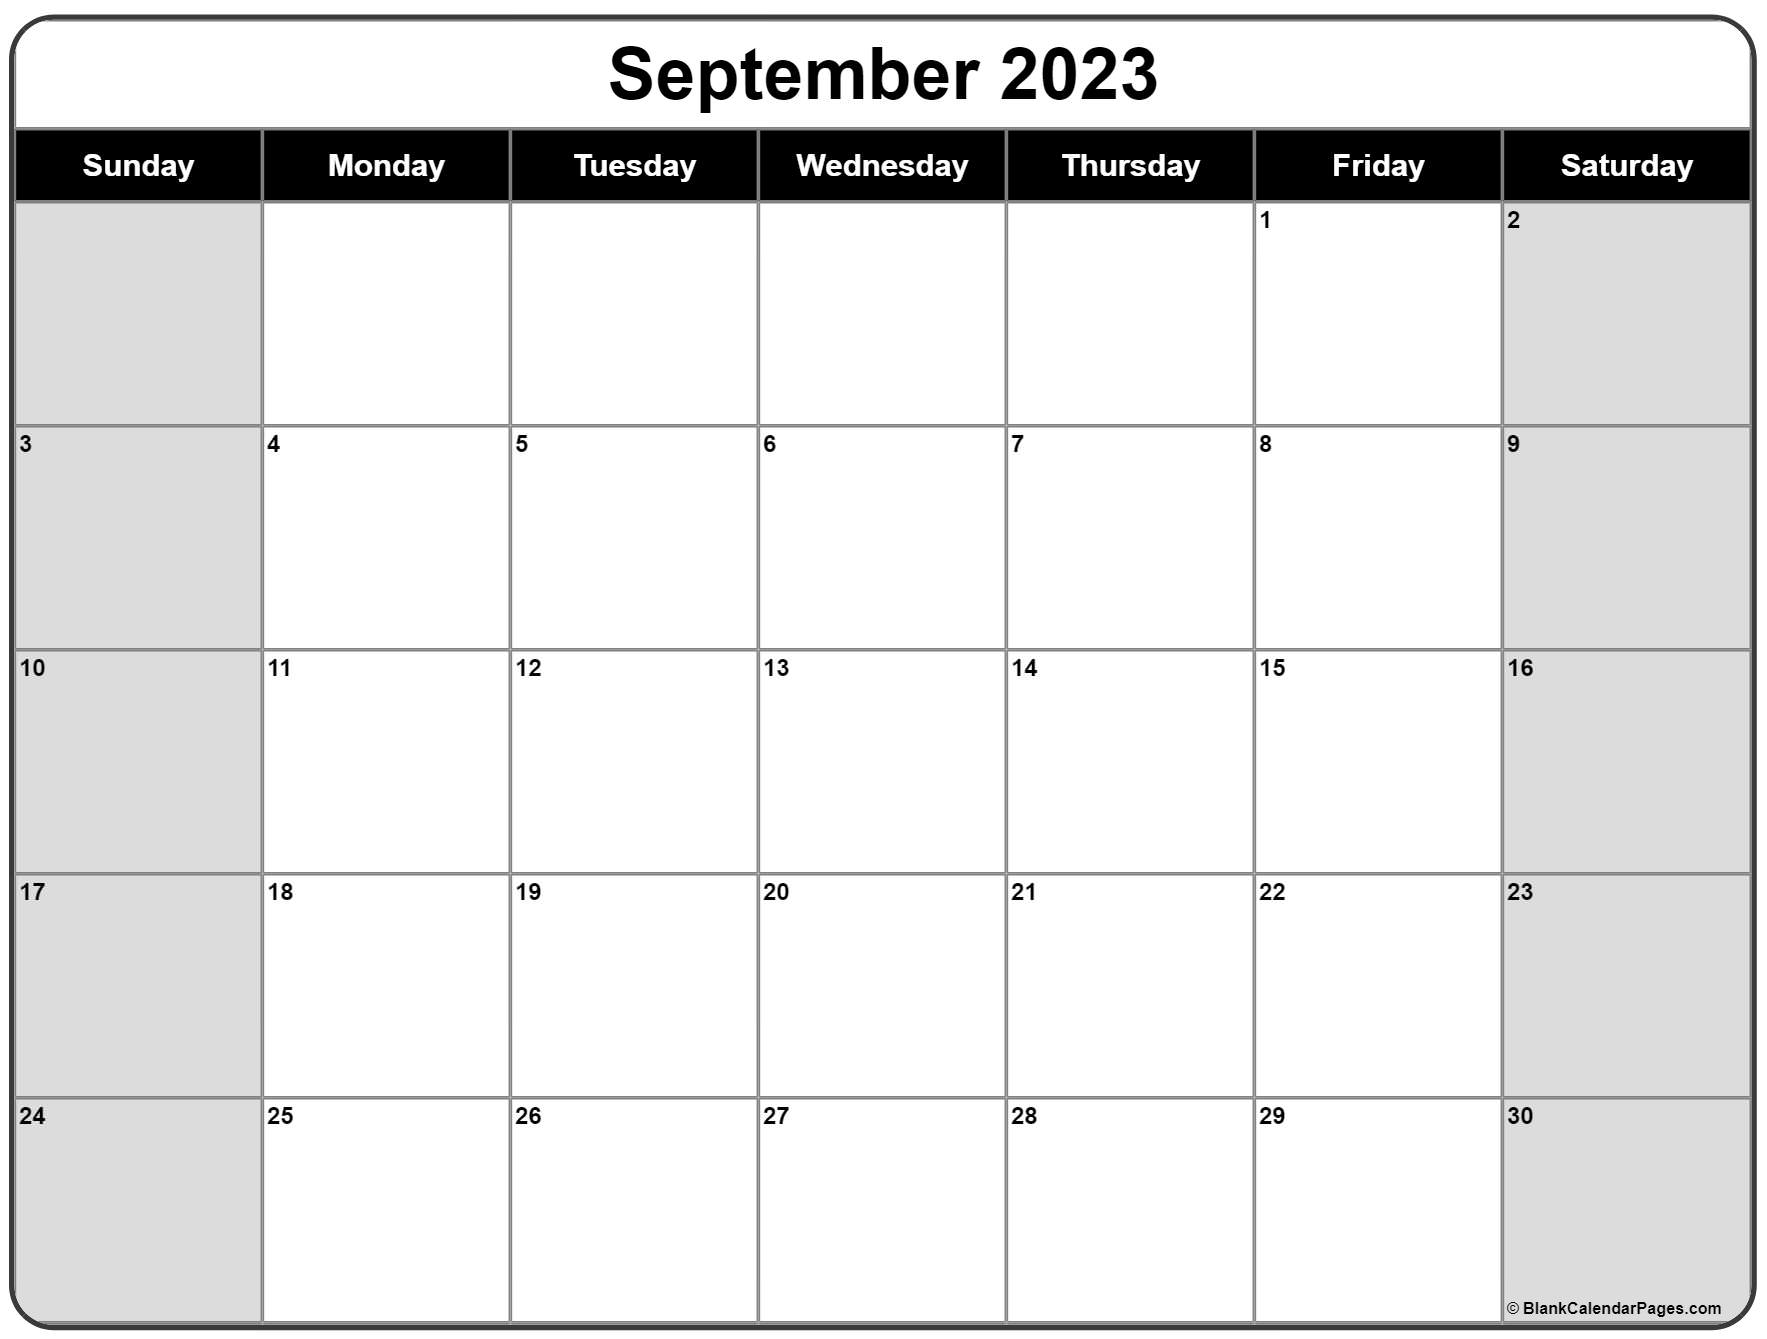 september-2023-calendar-free-printable-calendar